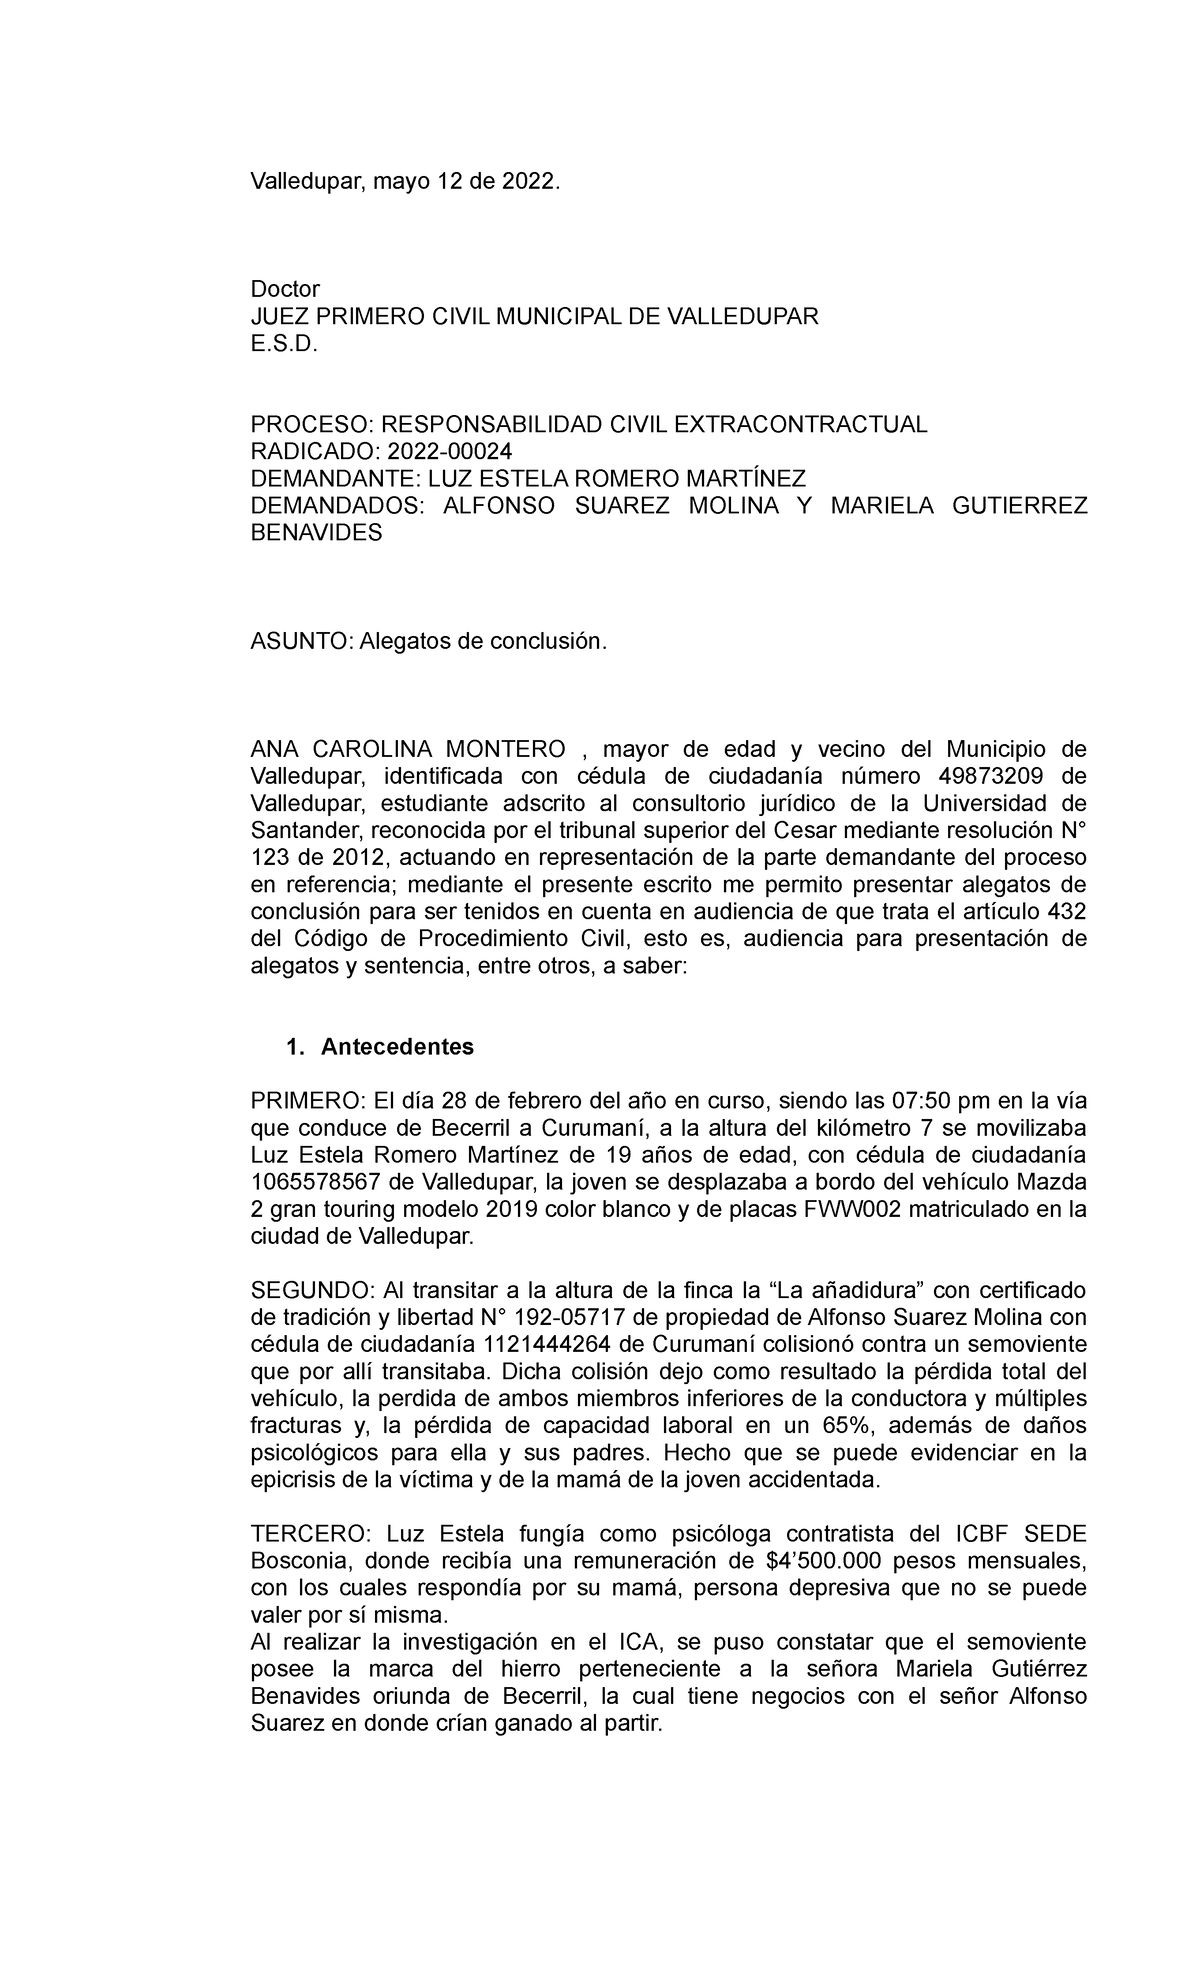 70 Modelo DE Alegatos DE Conclusion - Valledupar, mayo 12 de 2022. Doctor  JUEZ PRIMERO CIVIL - Studocu